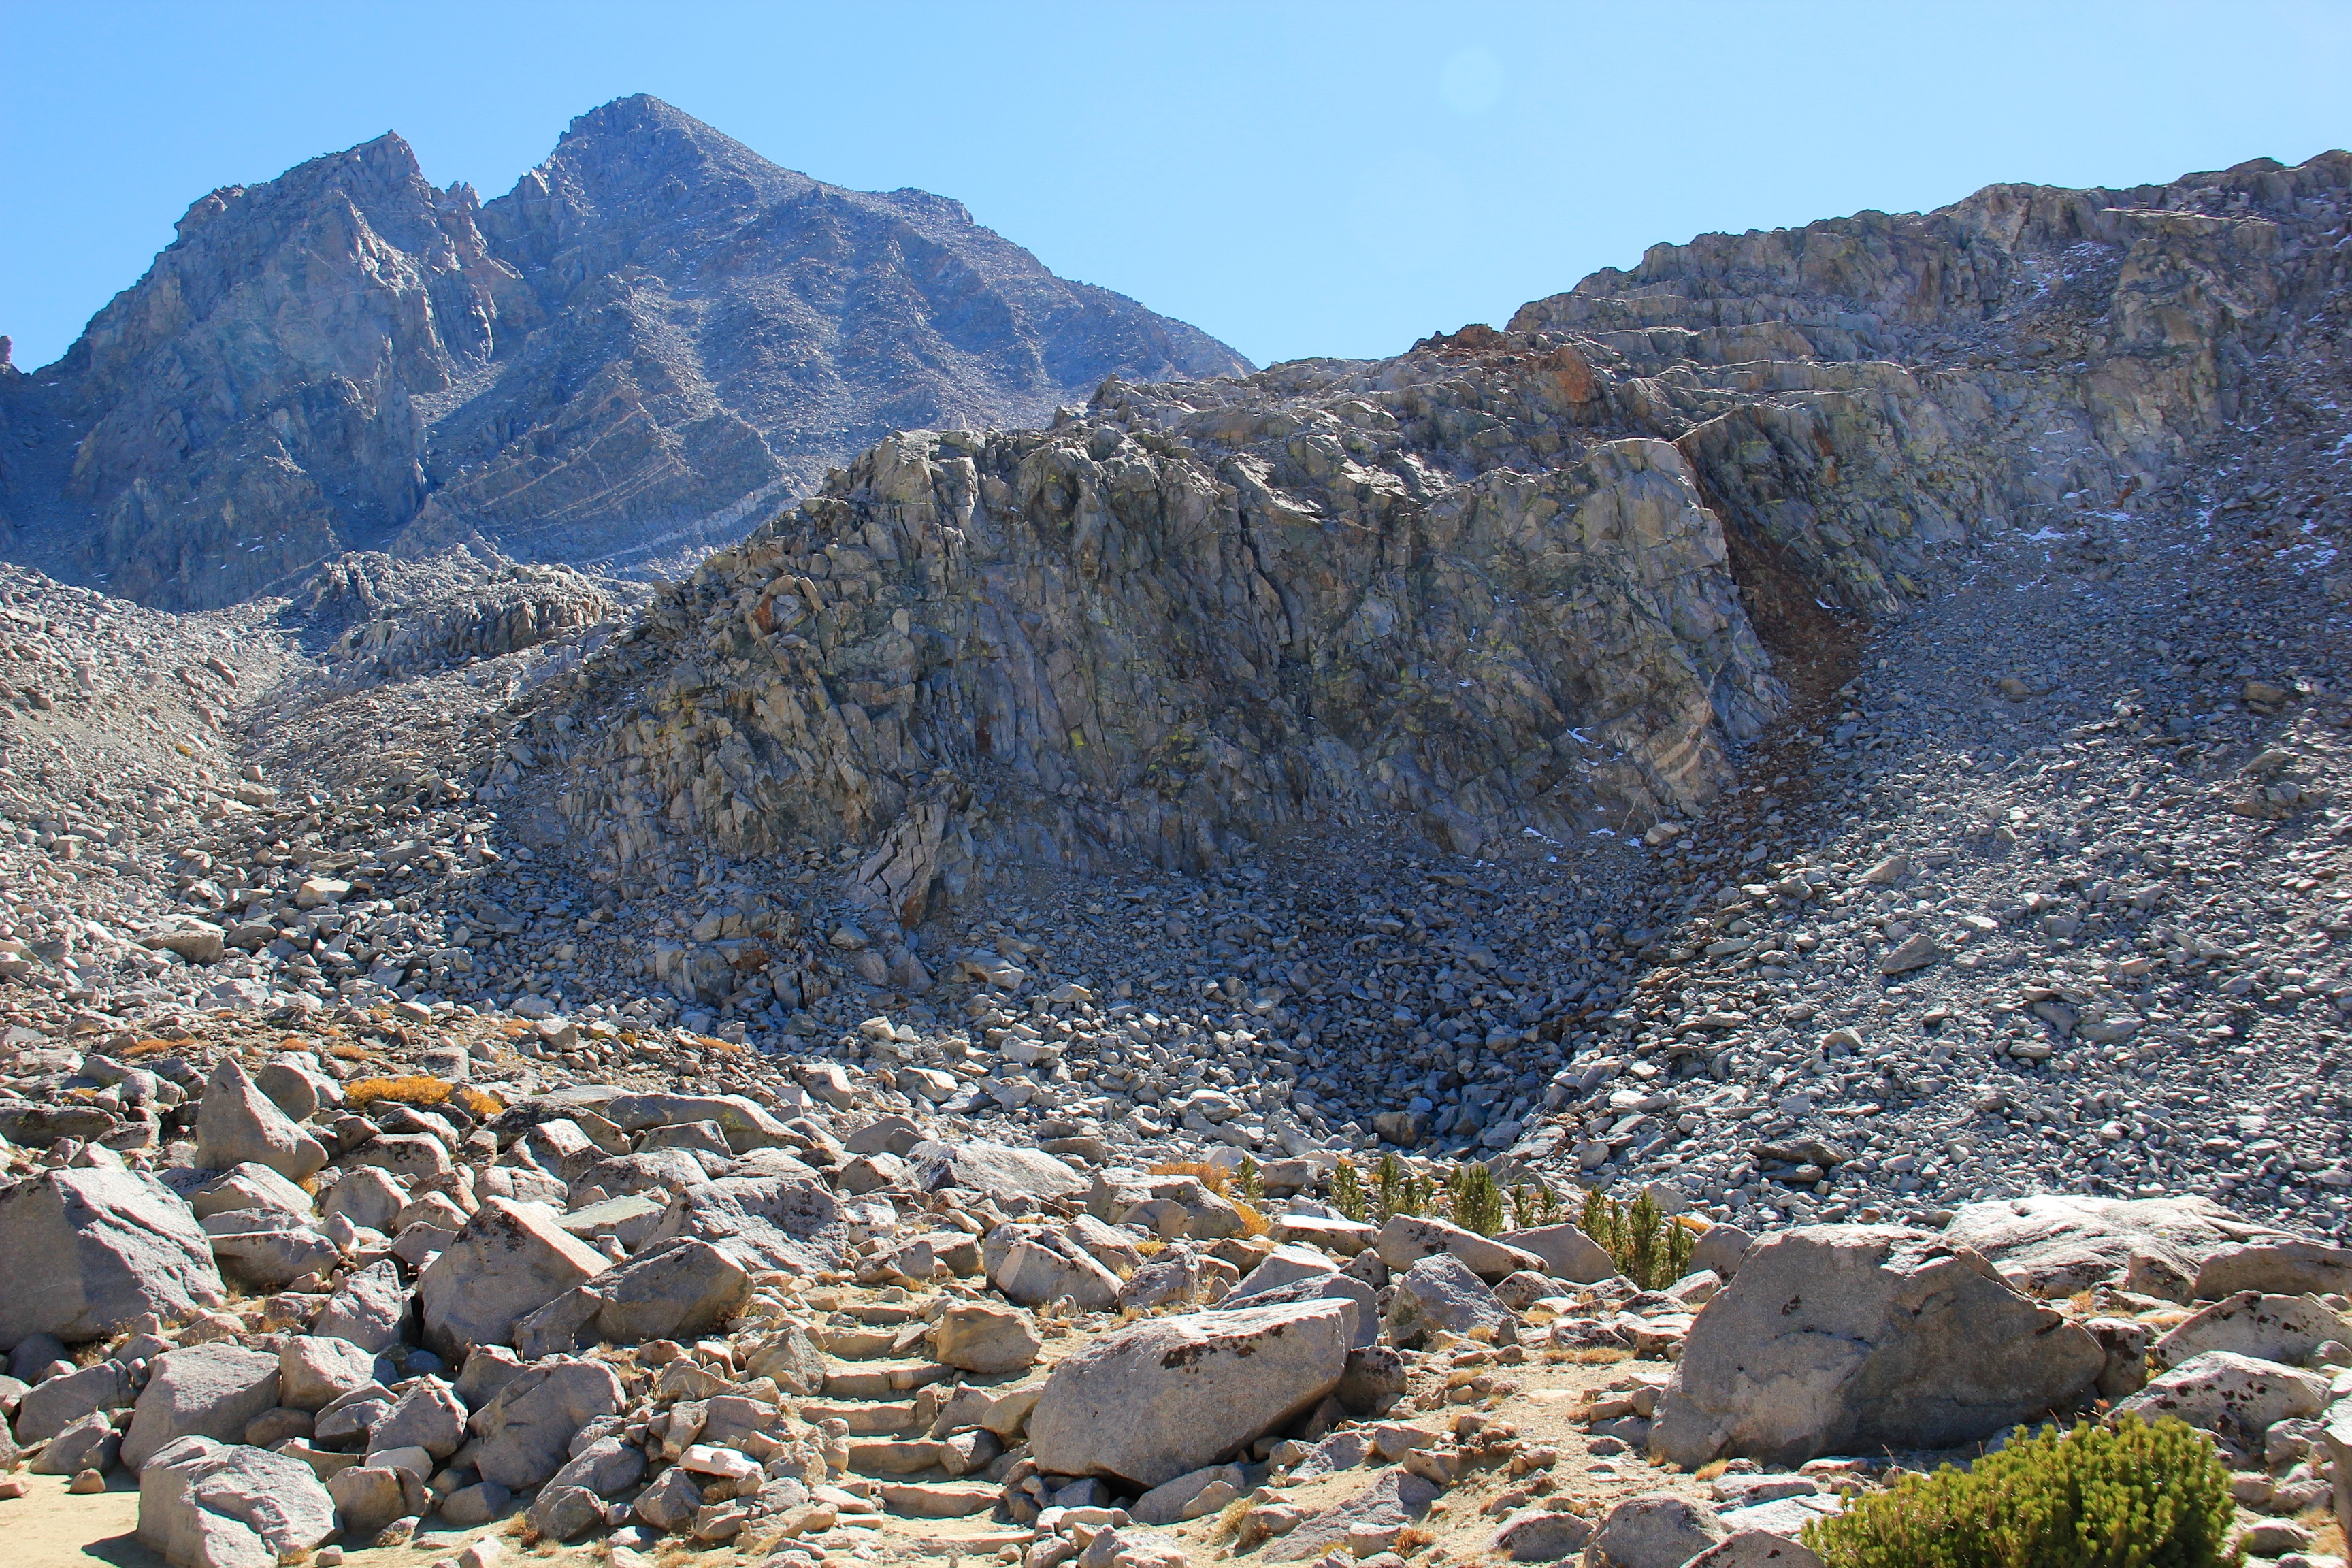 File:Trails through rocky mountain - Flickr - daveynin.jpg ...